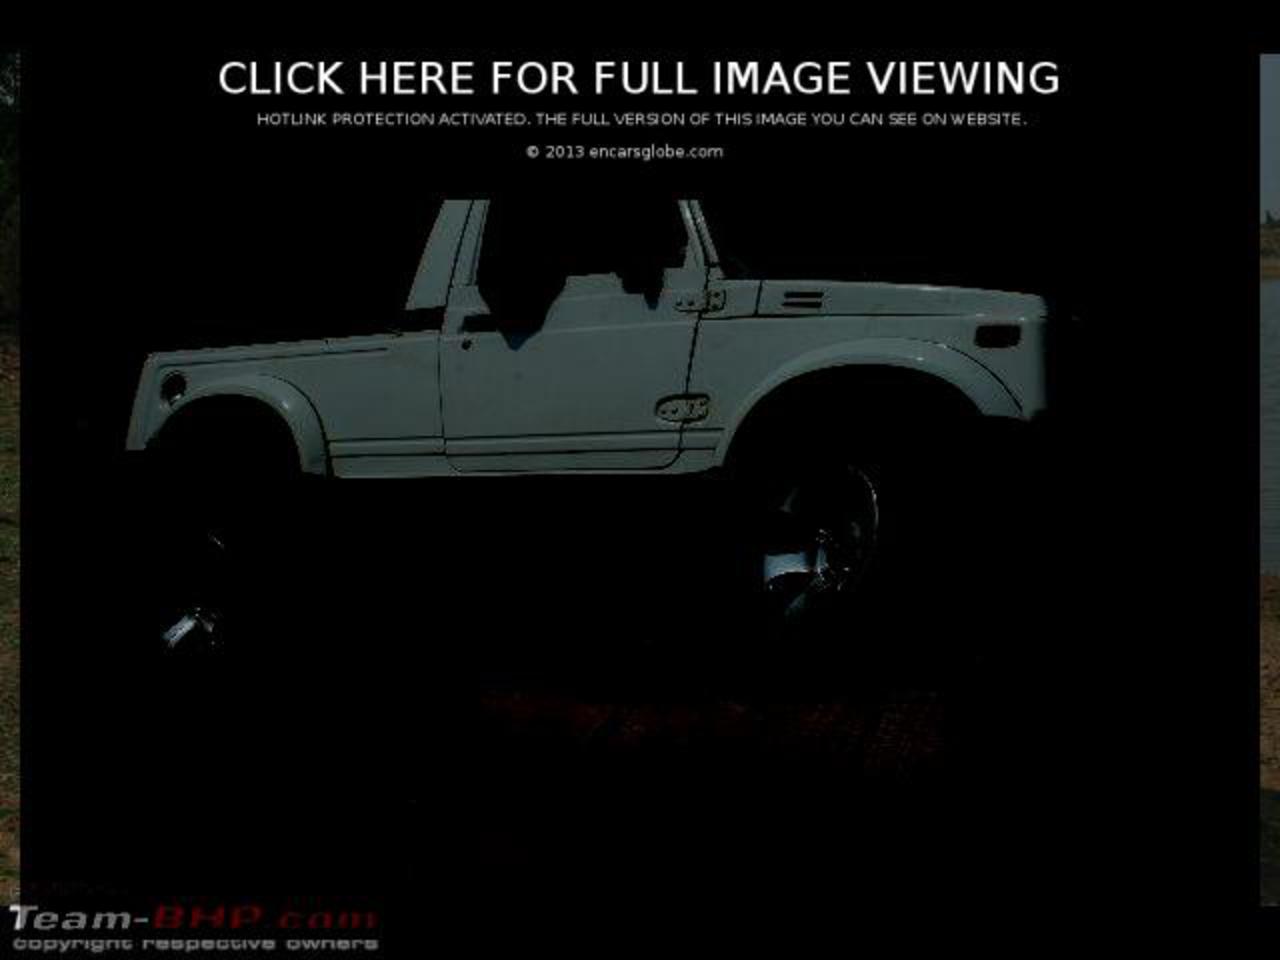 Mahindra BoleroTurbo 25 CRDe 4WD Photo Gallery: Photo #03 out of 6 ...